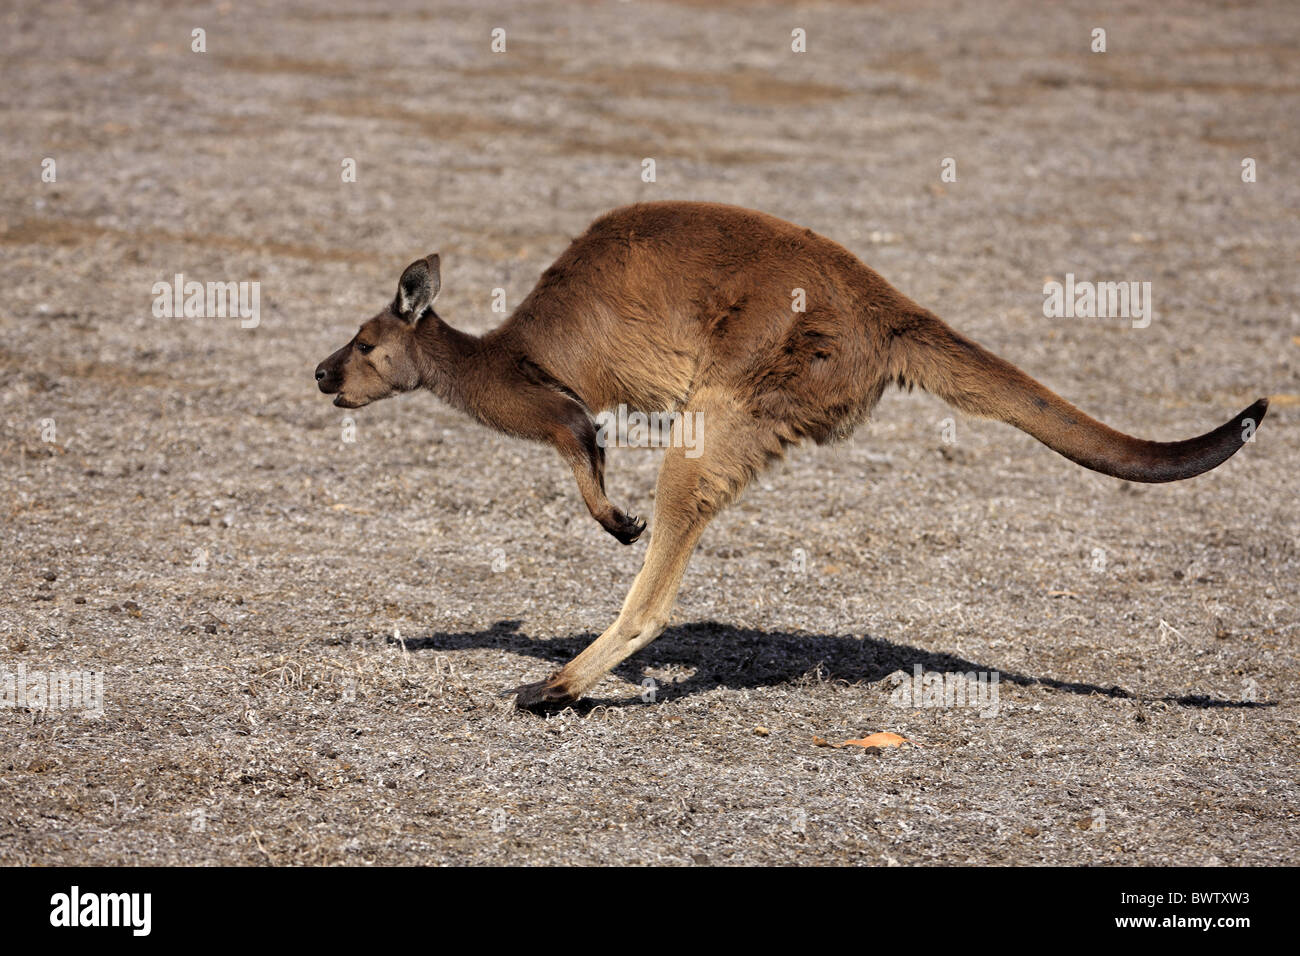 Springend - saltando i canguri canguro marsupiale marsupiali macropods macropod "nero fronte kangaroo' australia australian Foto Stock